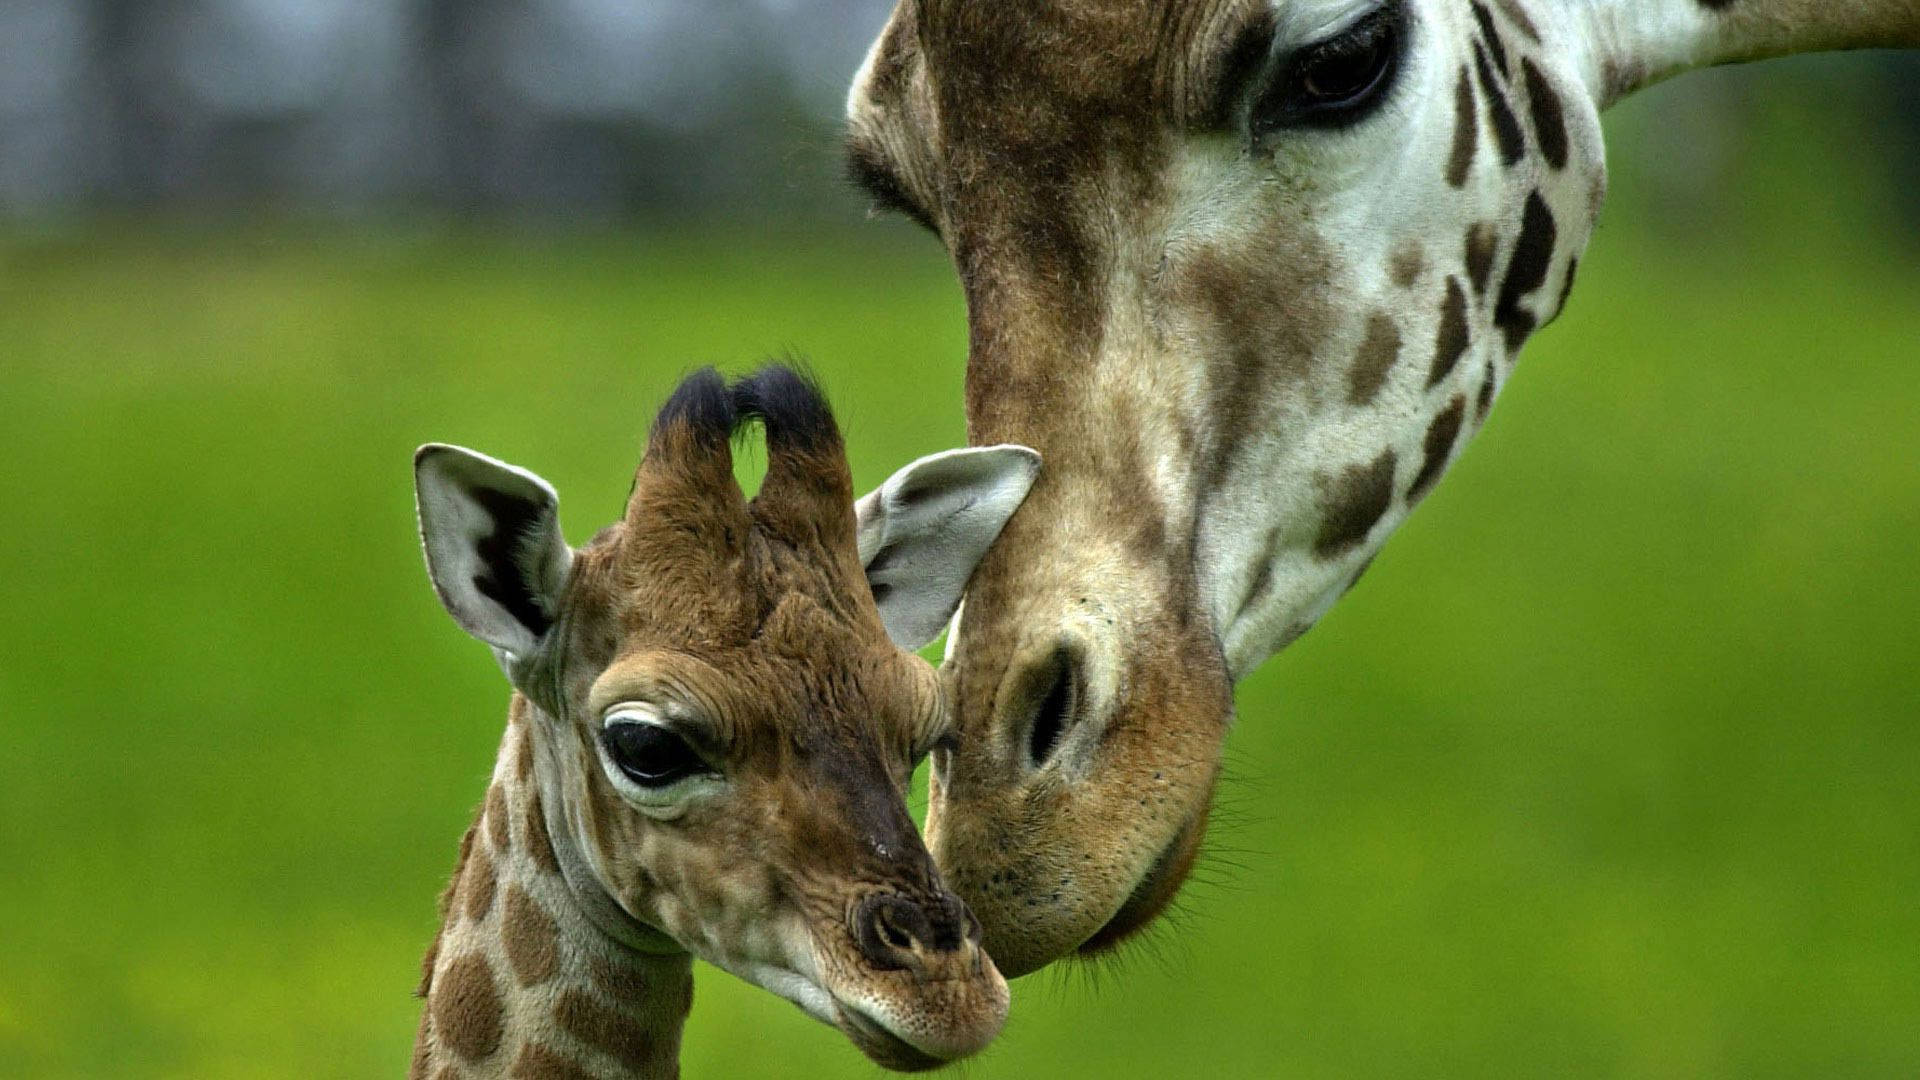 Baby Giraffe Being Adored